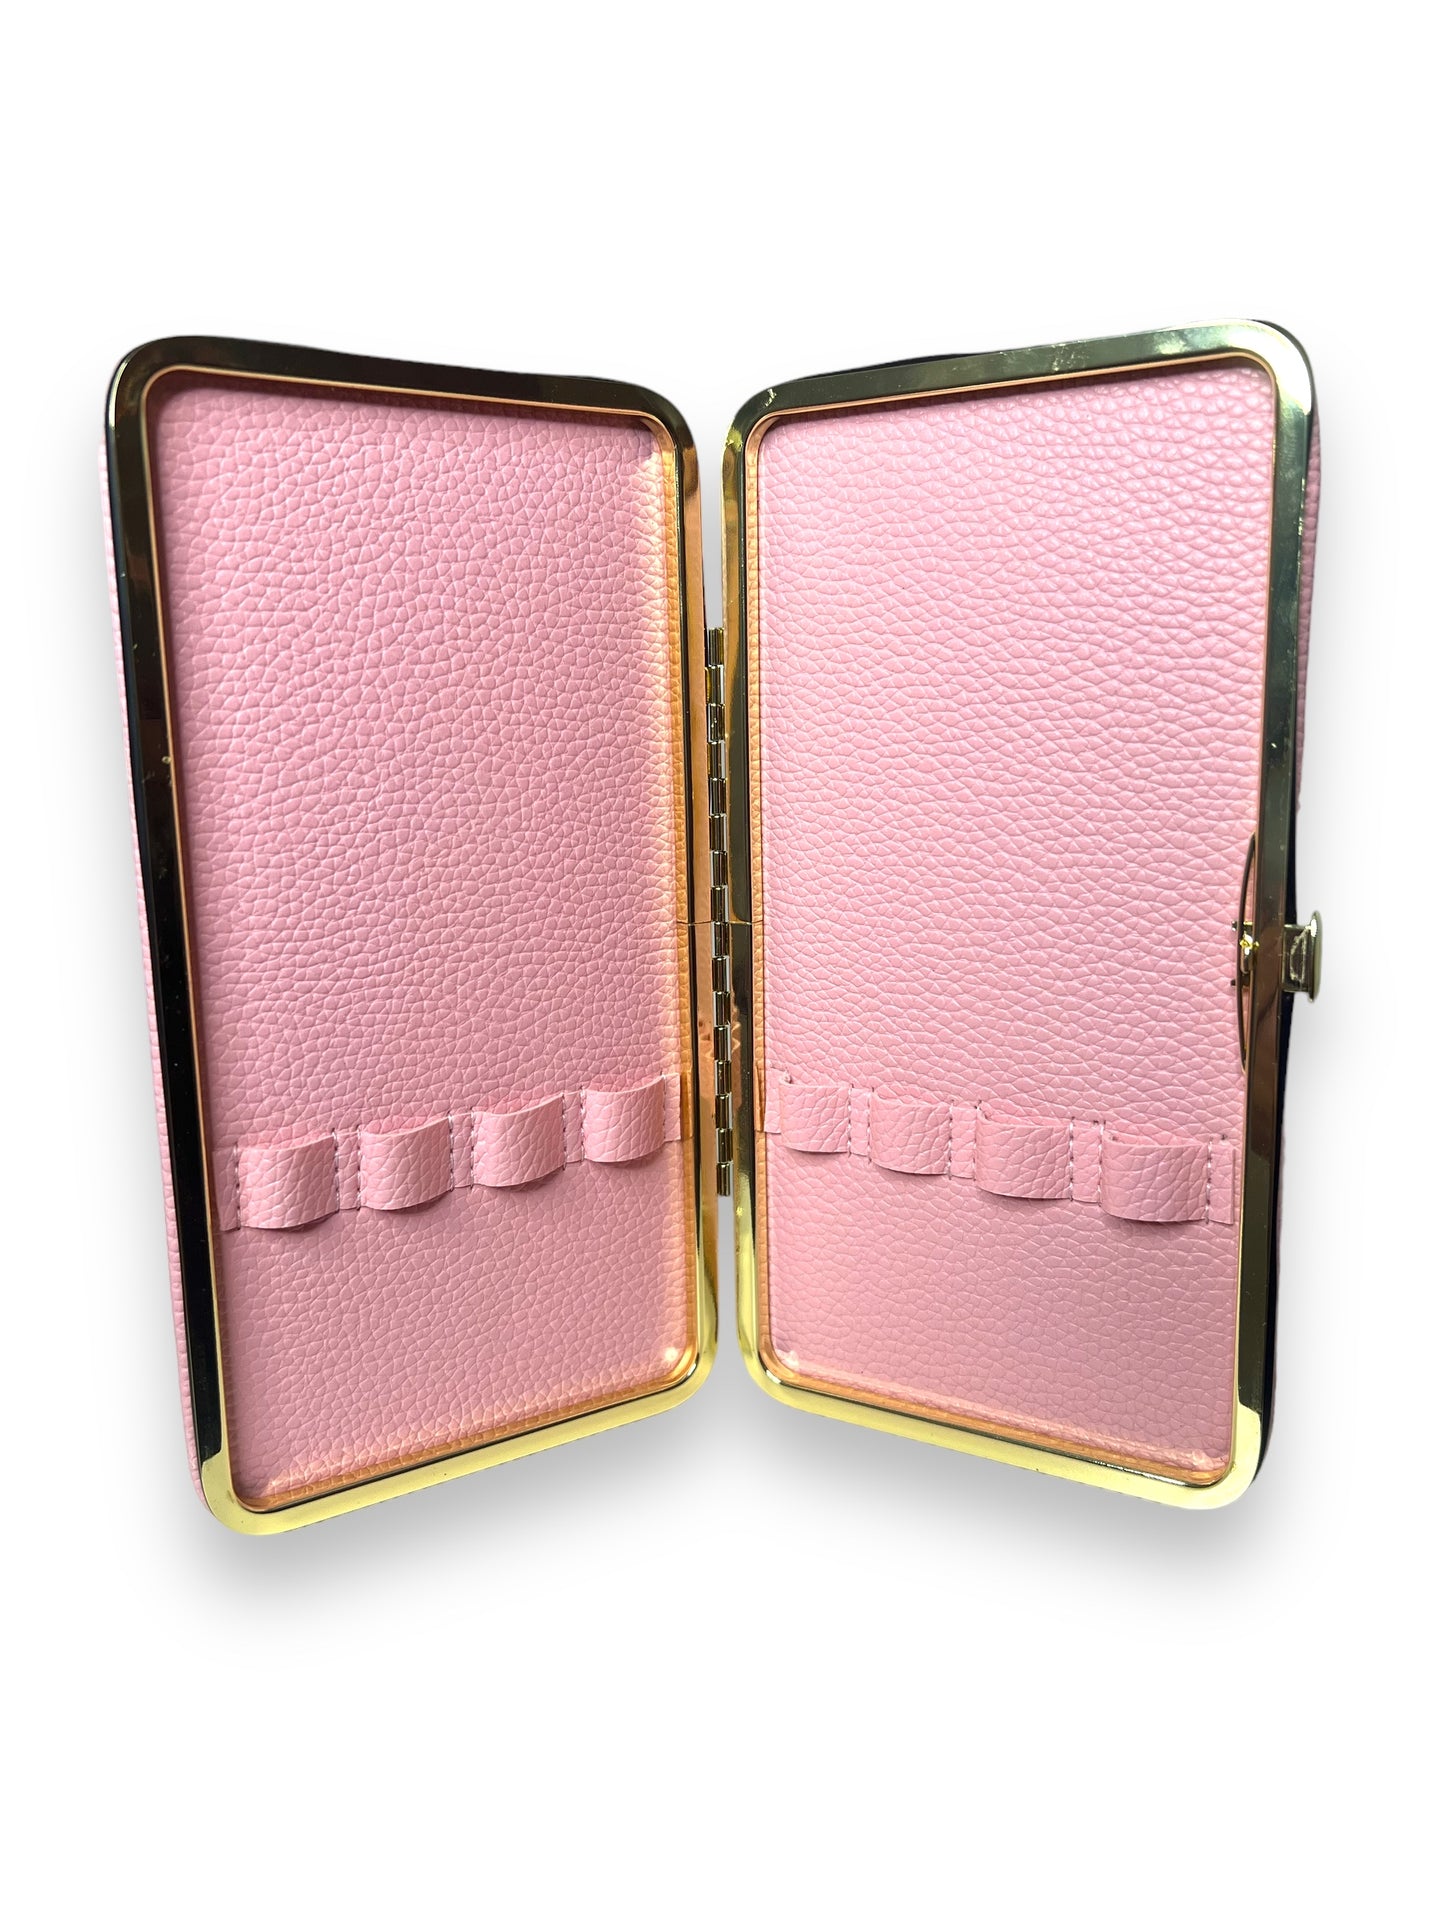 SPRING SALE - 9$ Pink Tweezer Case